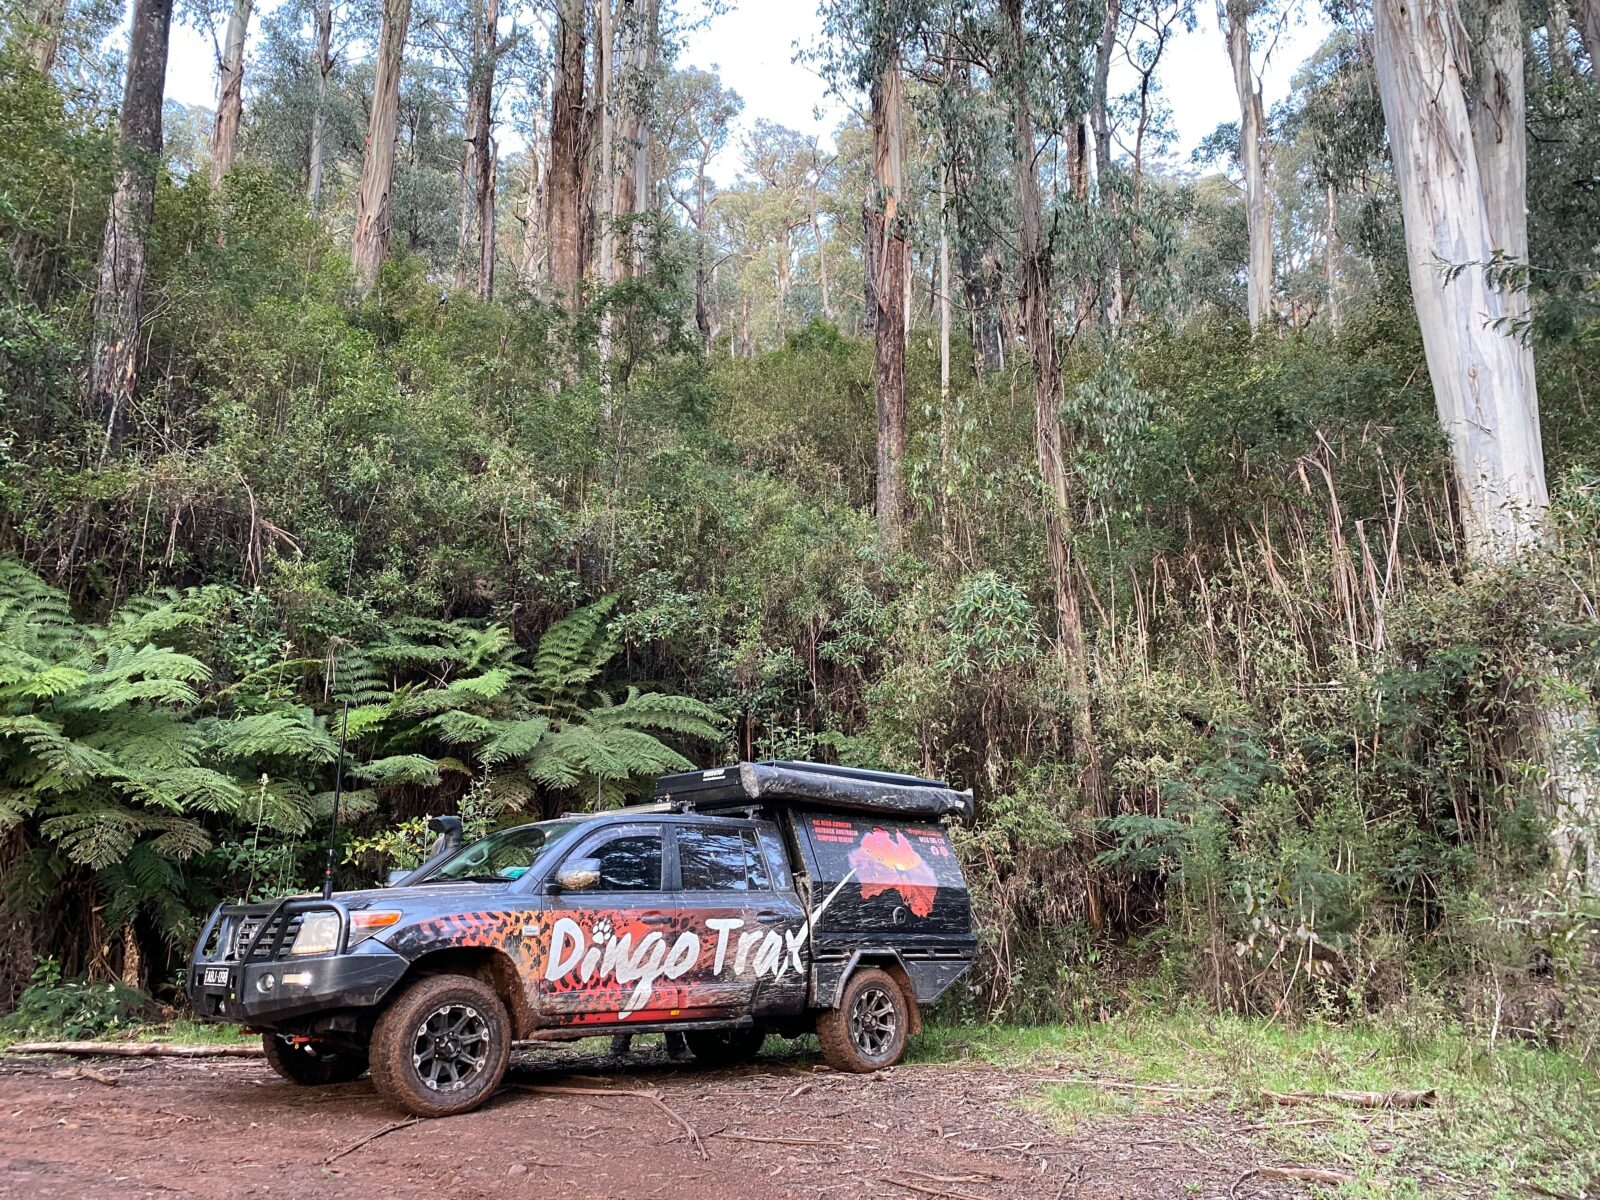 Dingo Trax in Wonnongatta, Victorian High Country